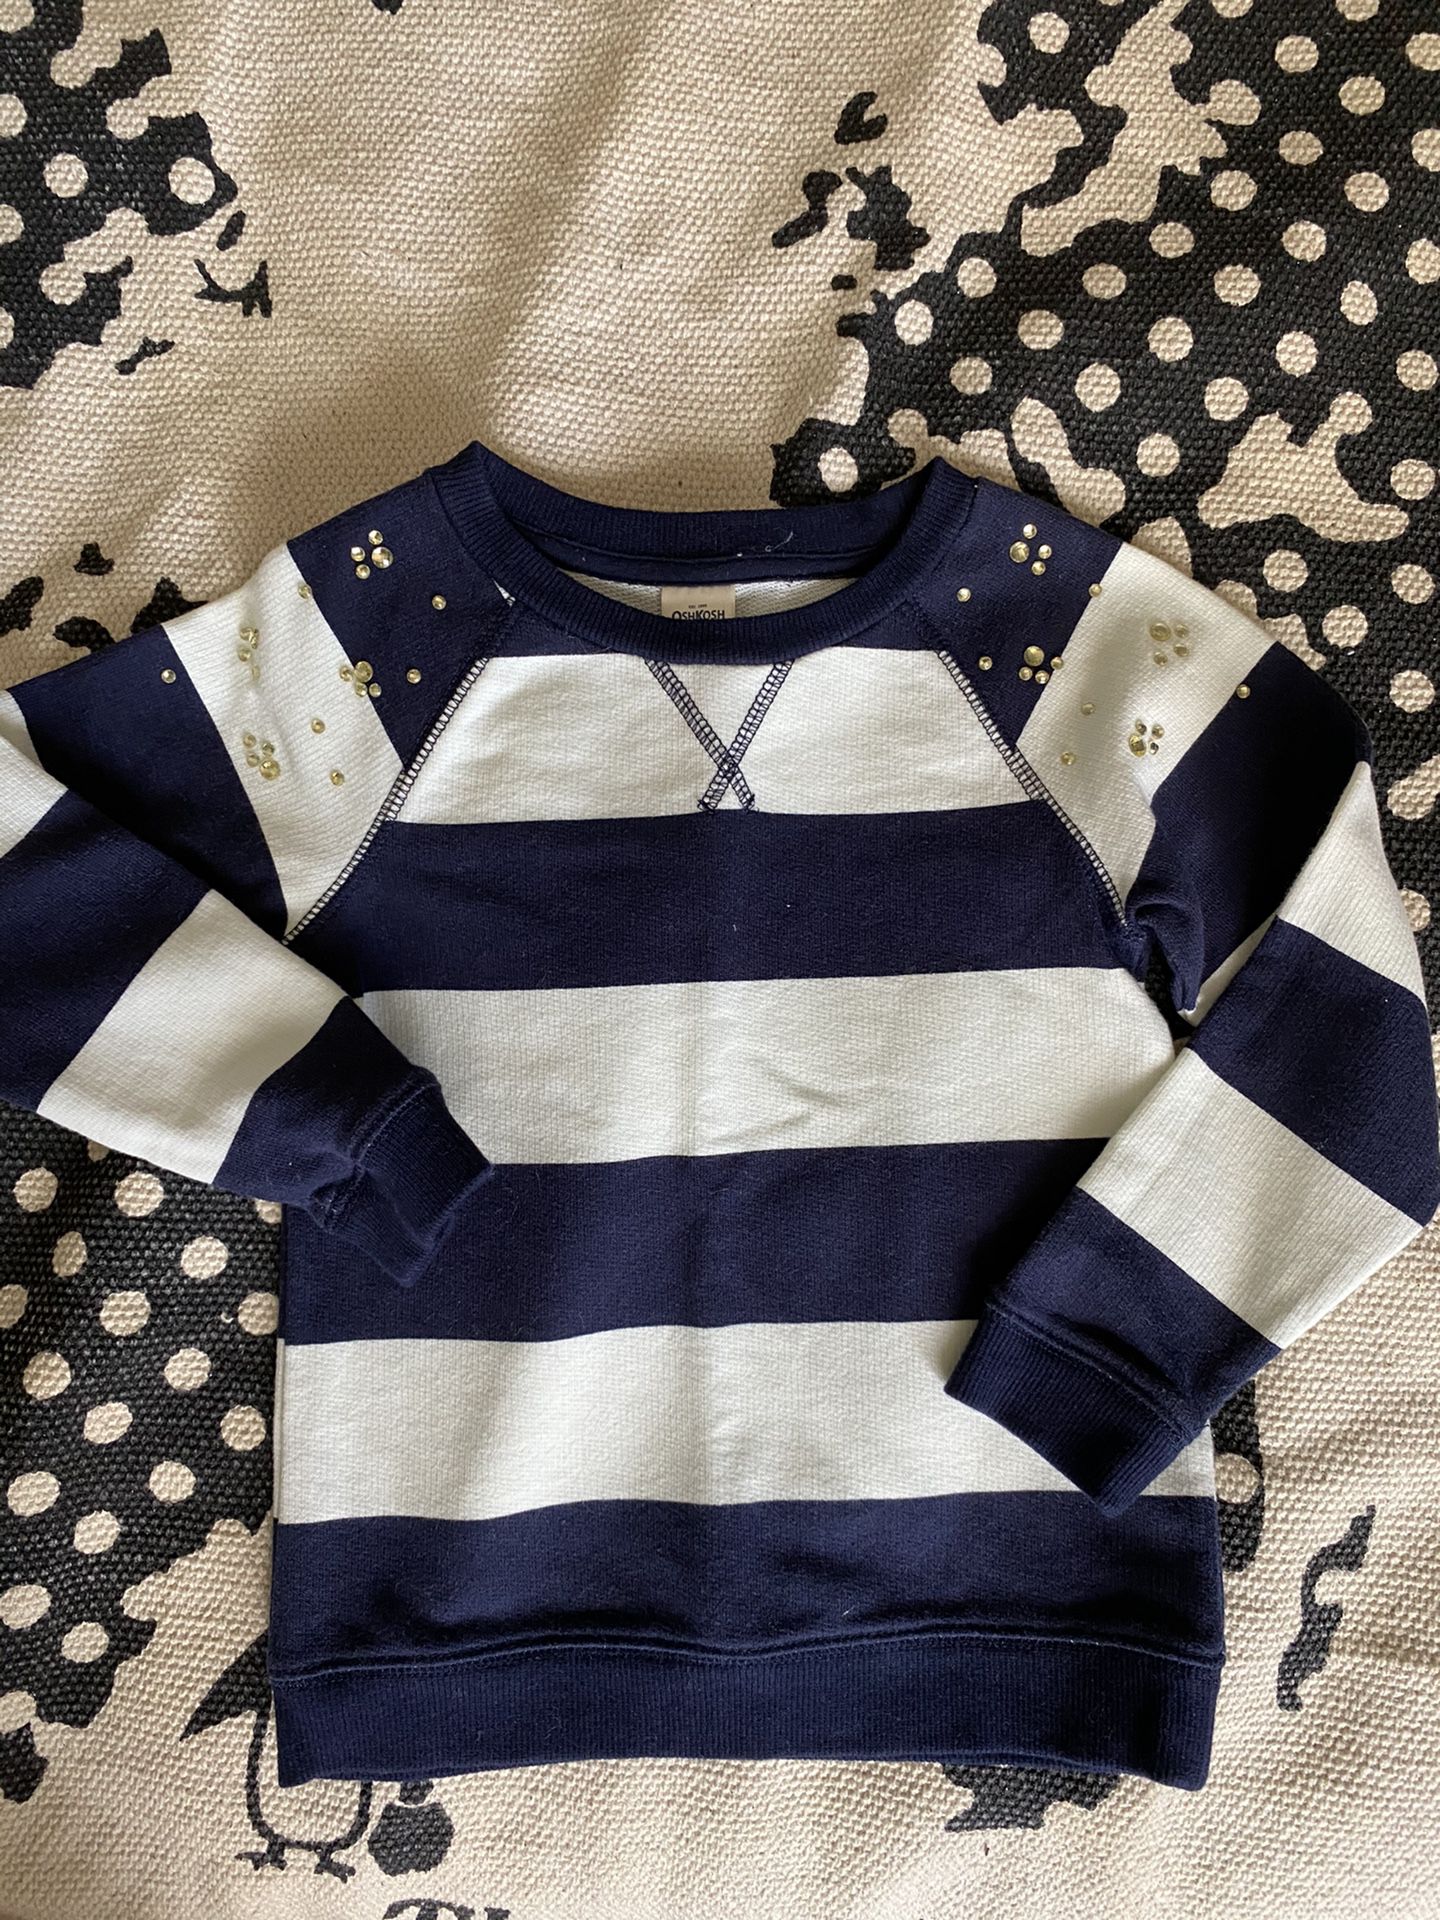 Girl’s Sweatshirt Size 3T Kids Clothes 